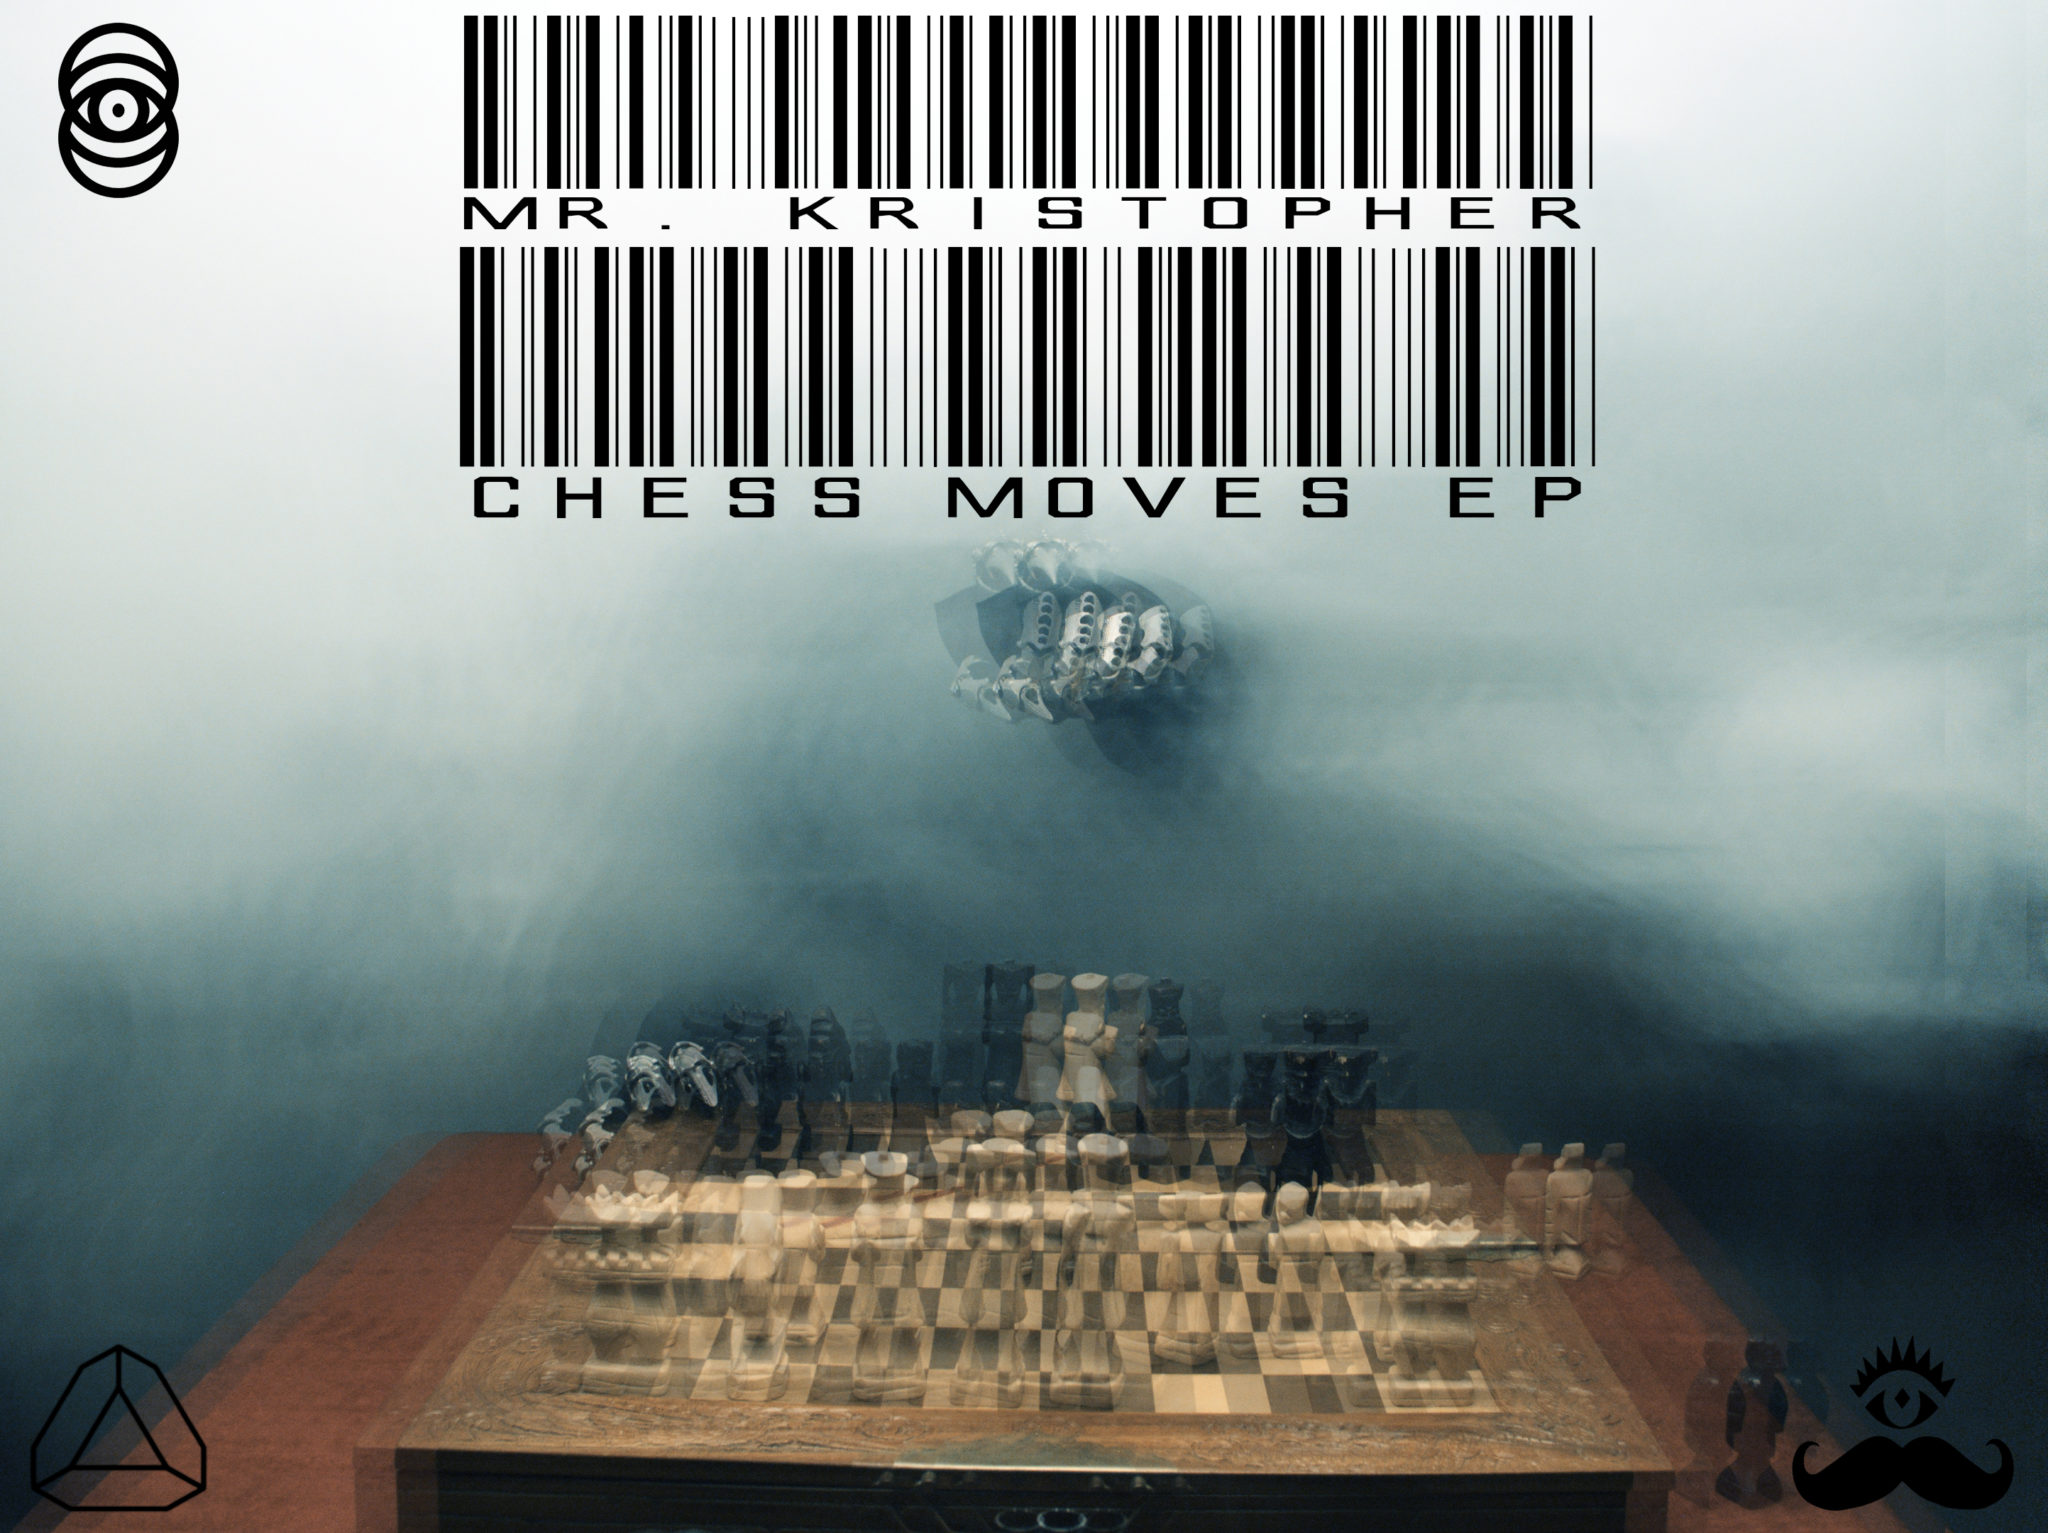 Chess Moves EP - Album Artwork